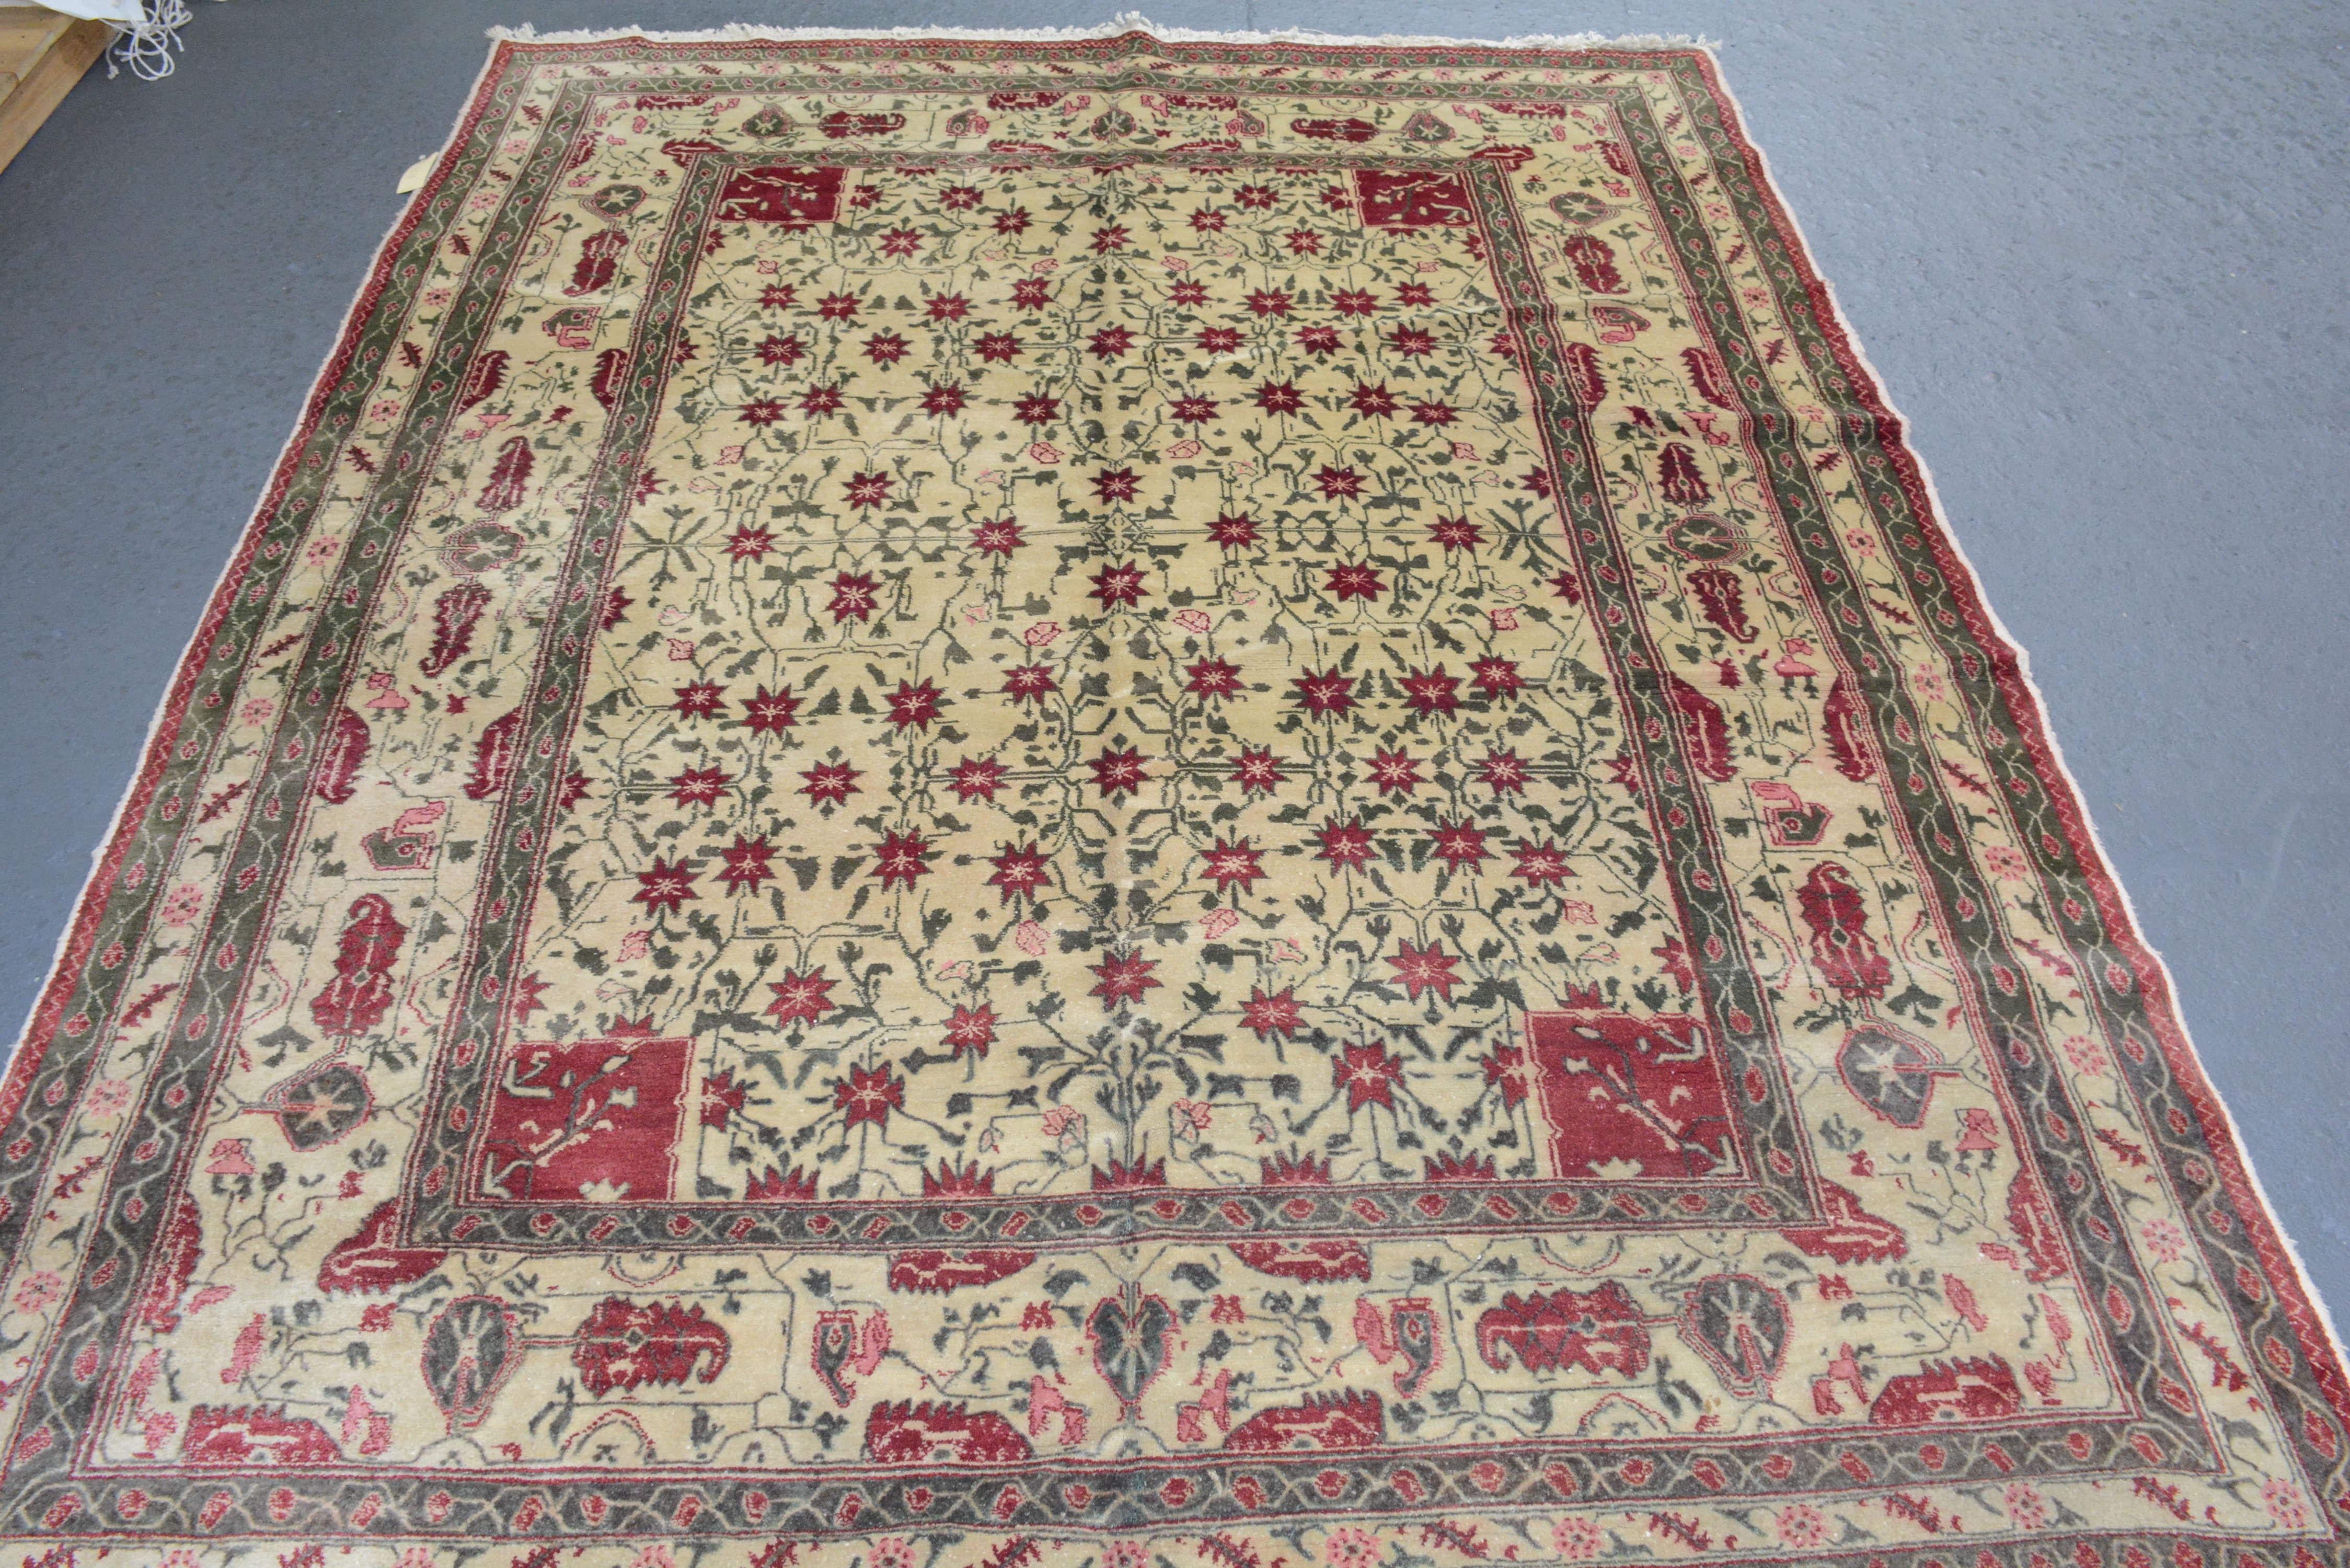 Woven Antique Agra Carpet For Sale